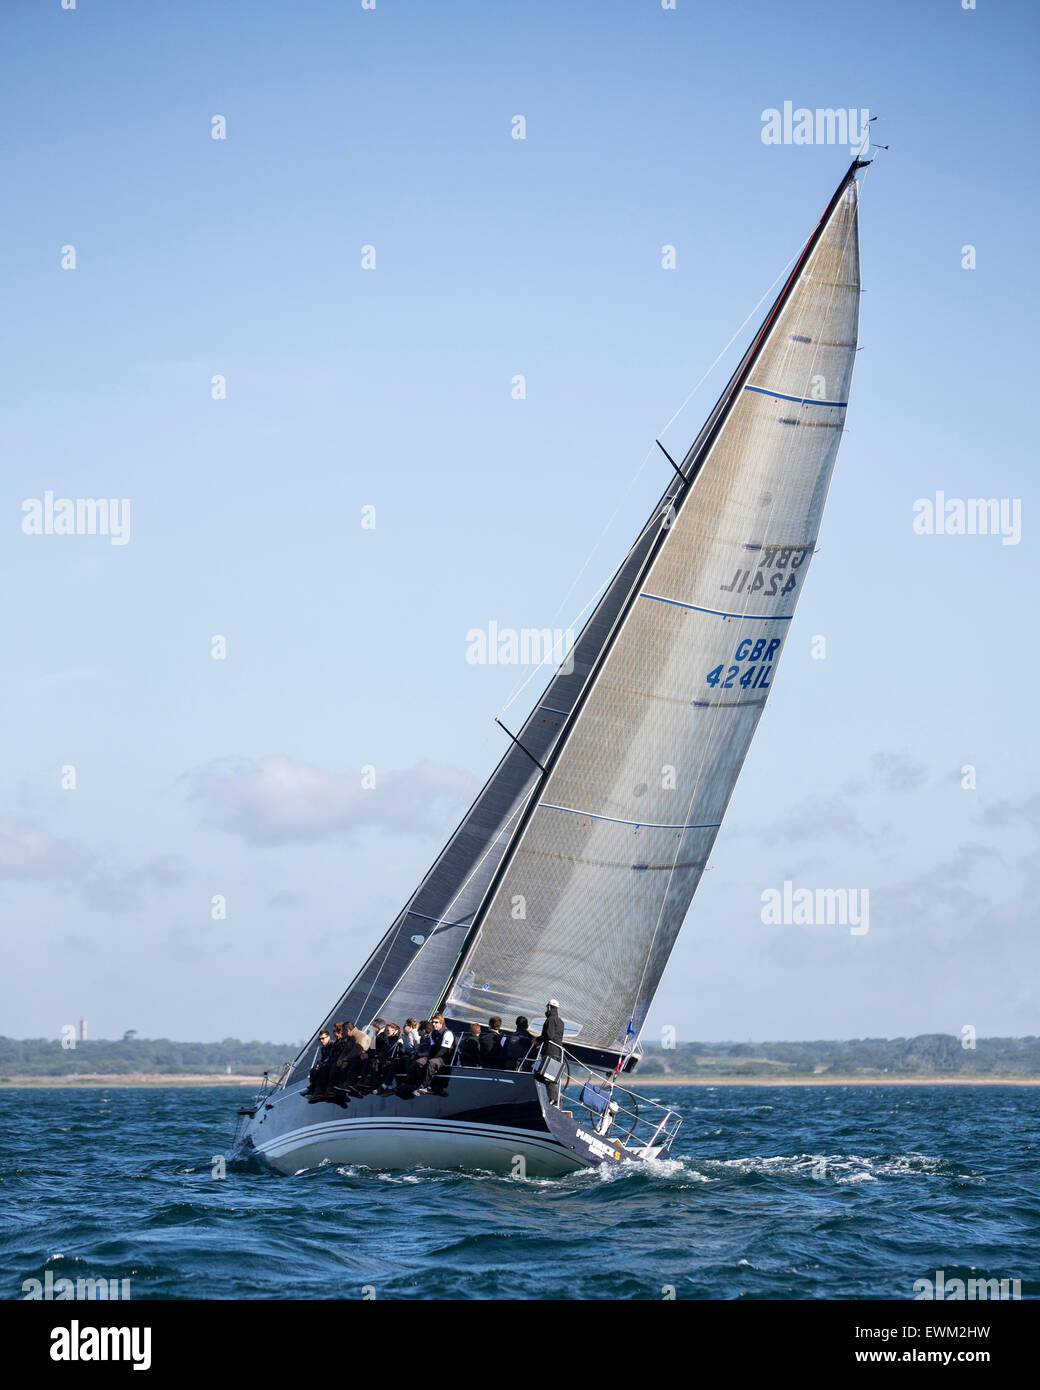 UK. 27th June, 2015. Swan 42 Club GBR 4241L 'Maverick 5' taking part in the 2015 Round the Island Race Credit:  Niall Ferguson/Alamy Live News Stock Photo